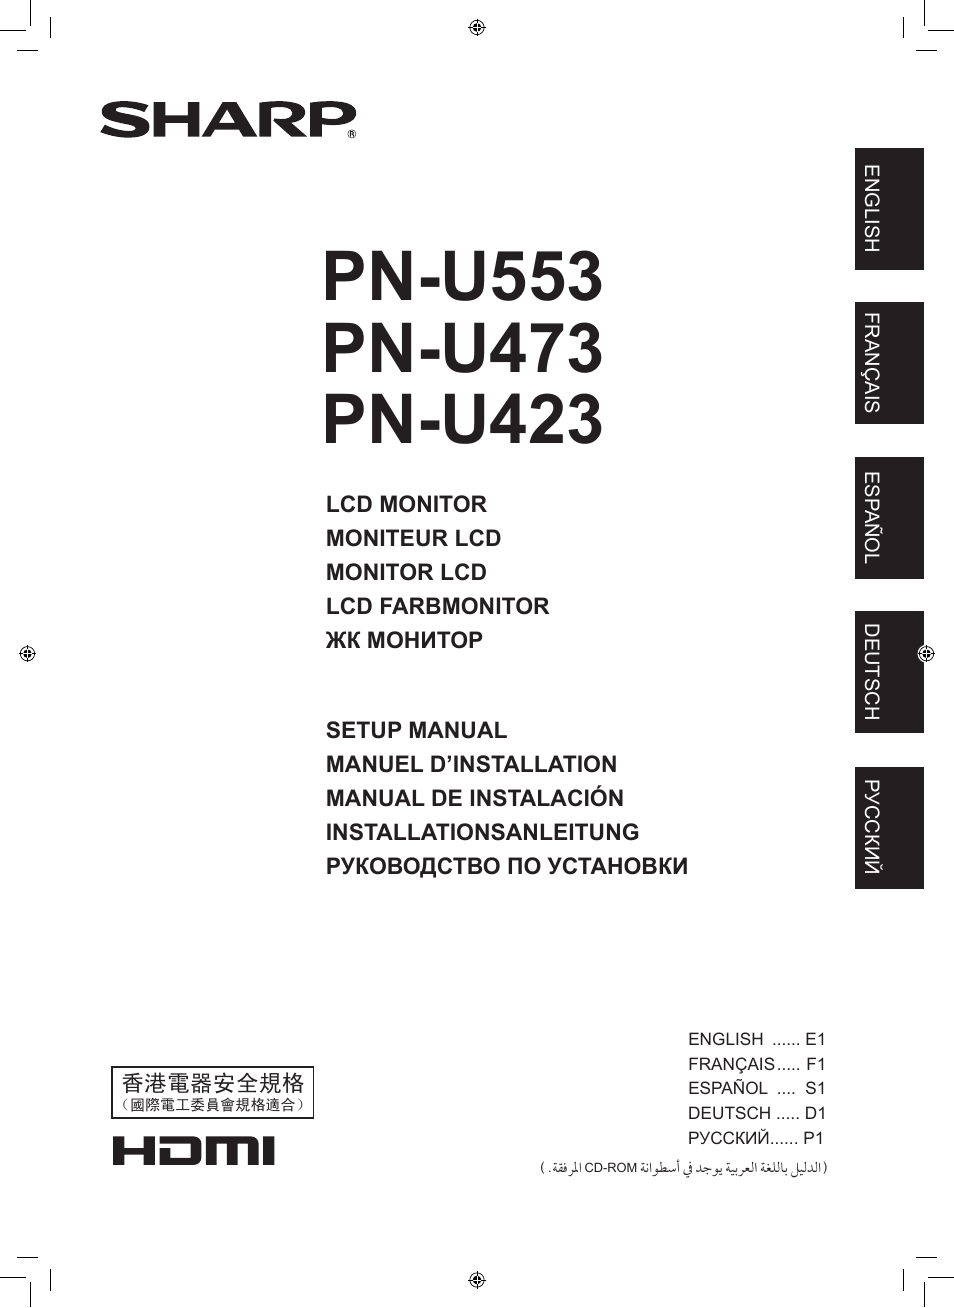 Sharp PN-U423 User Manual | 44 pages